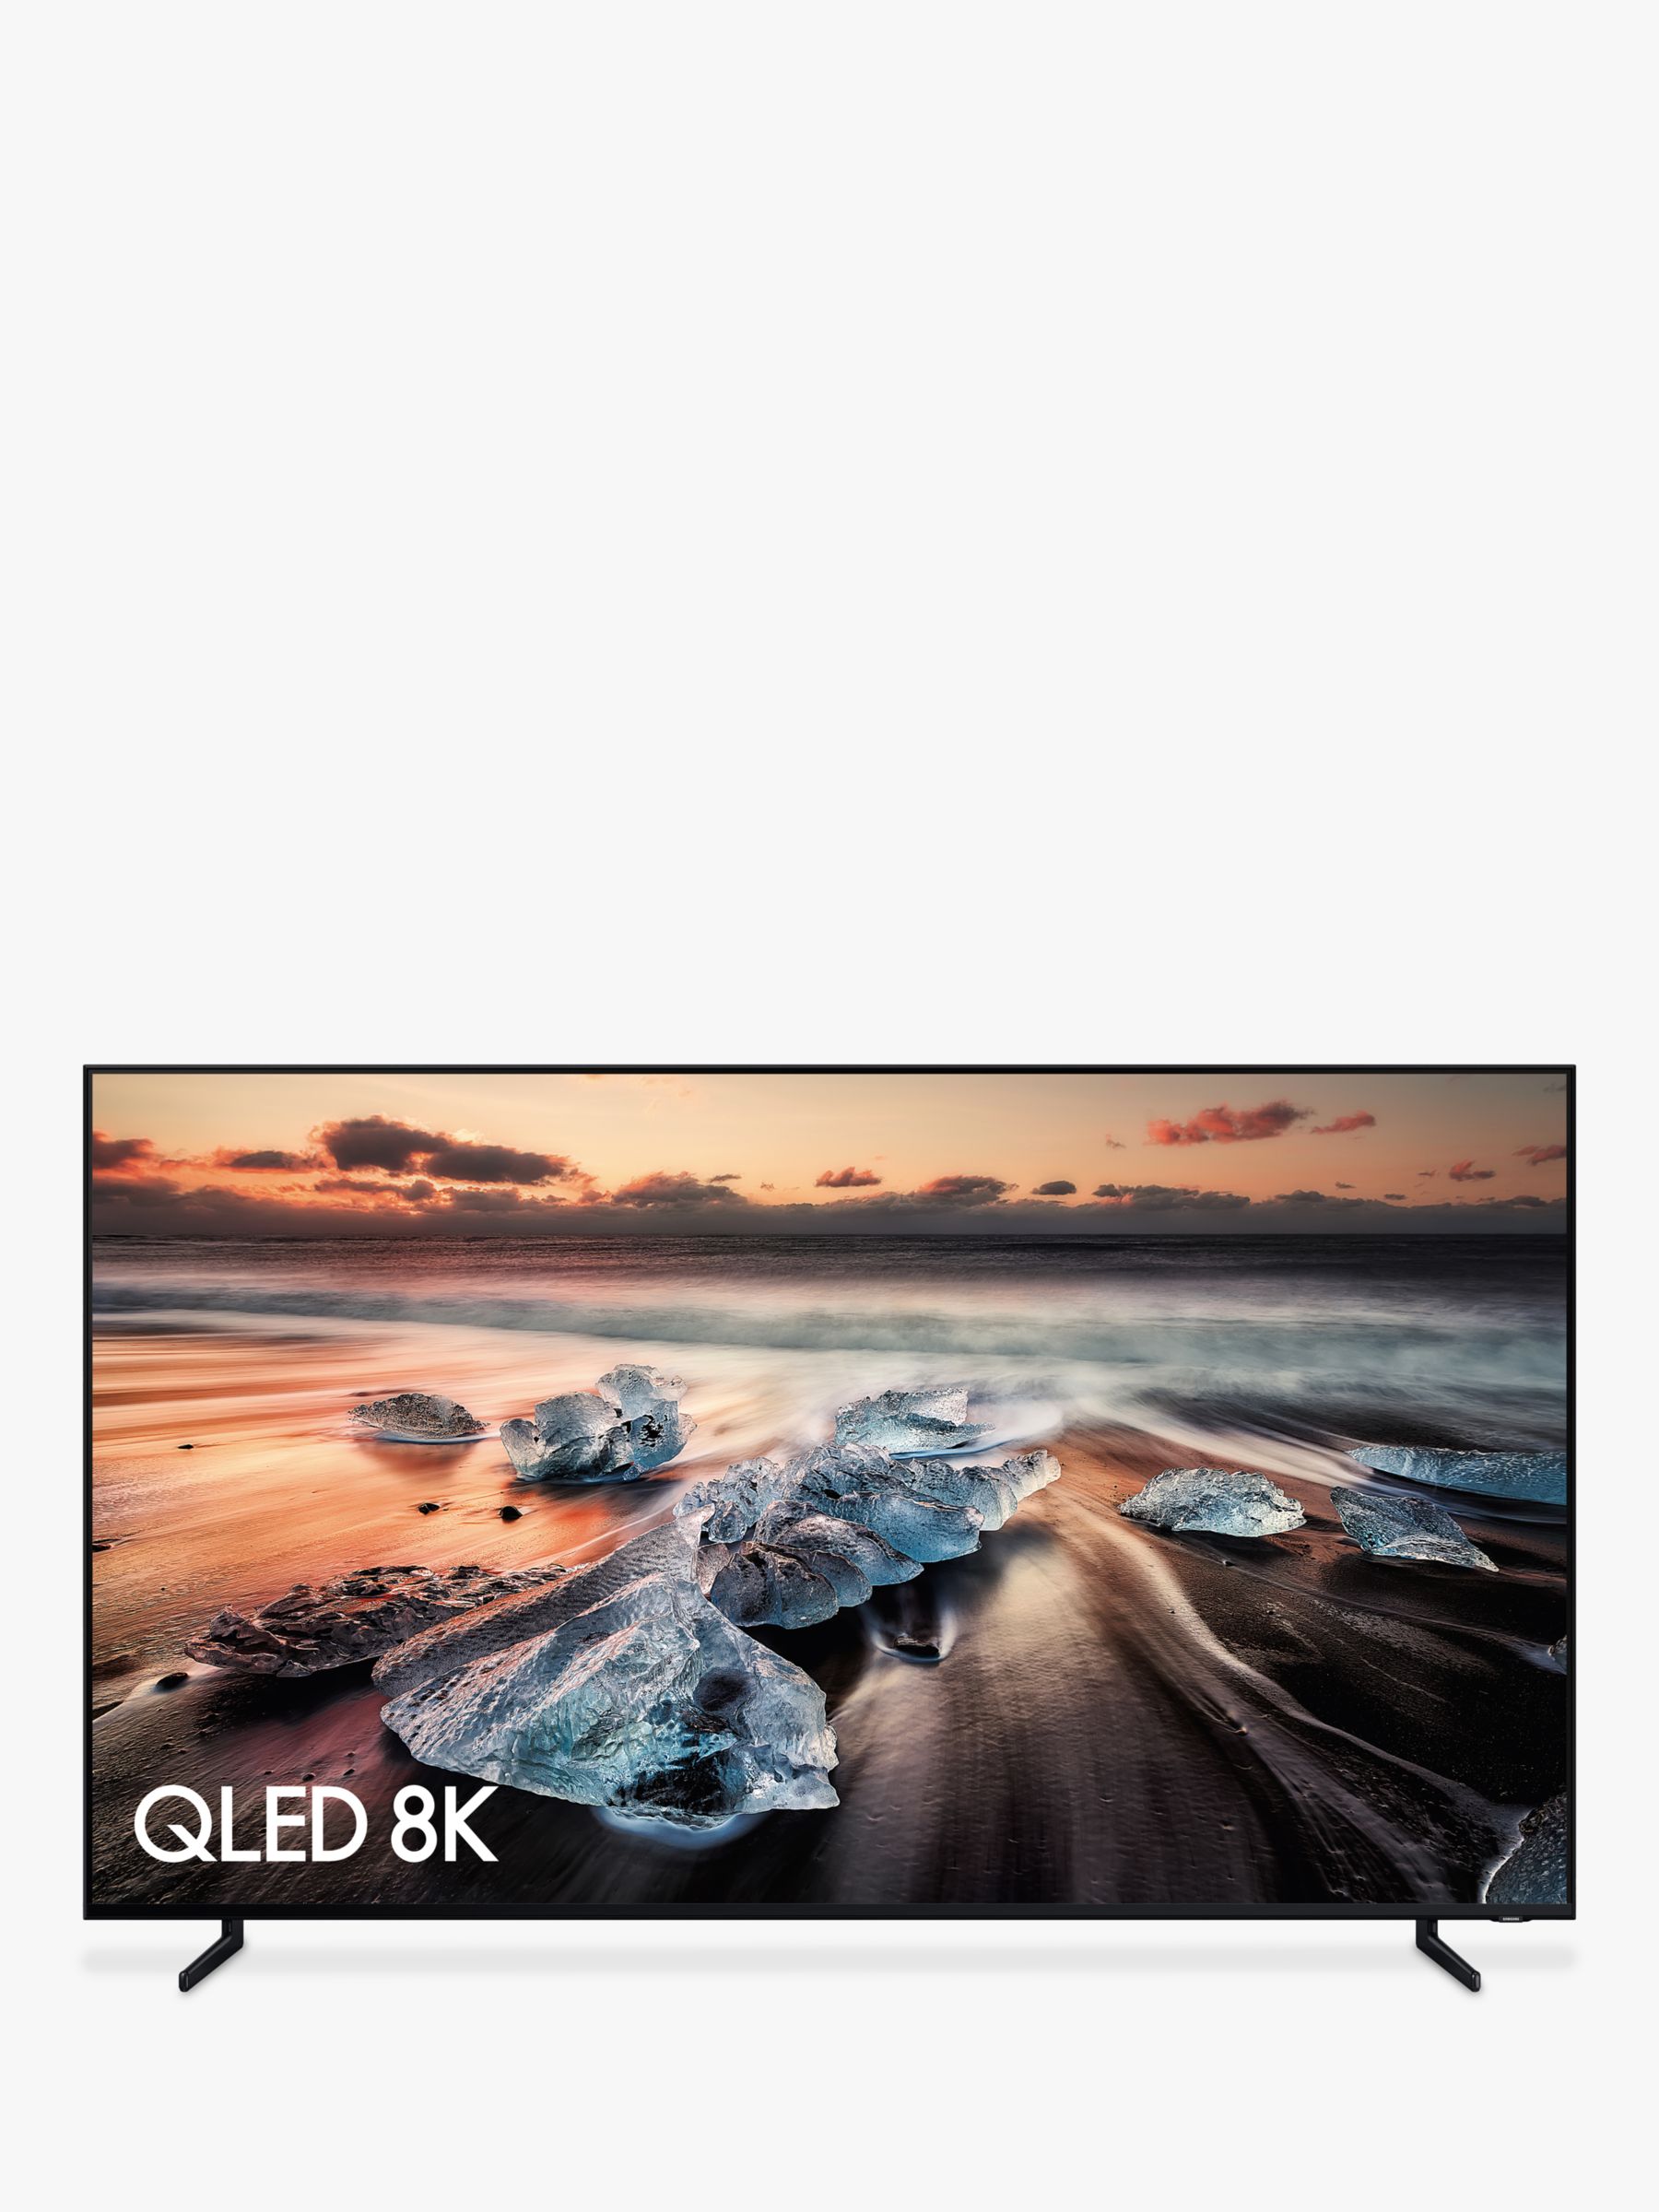 Samsung QE65Q900R (2018) QLED HDR 3000 8K Ultra HD Smart TV, 65 with TVPlus/Freesat HD & 360 Design, Black